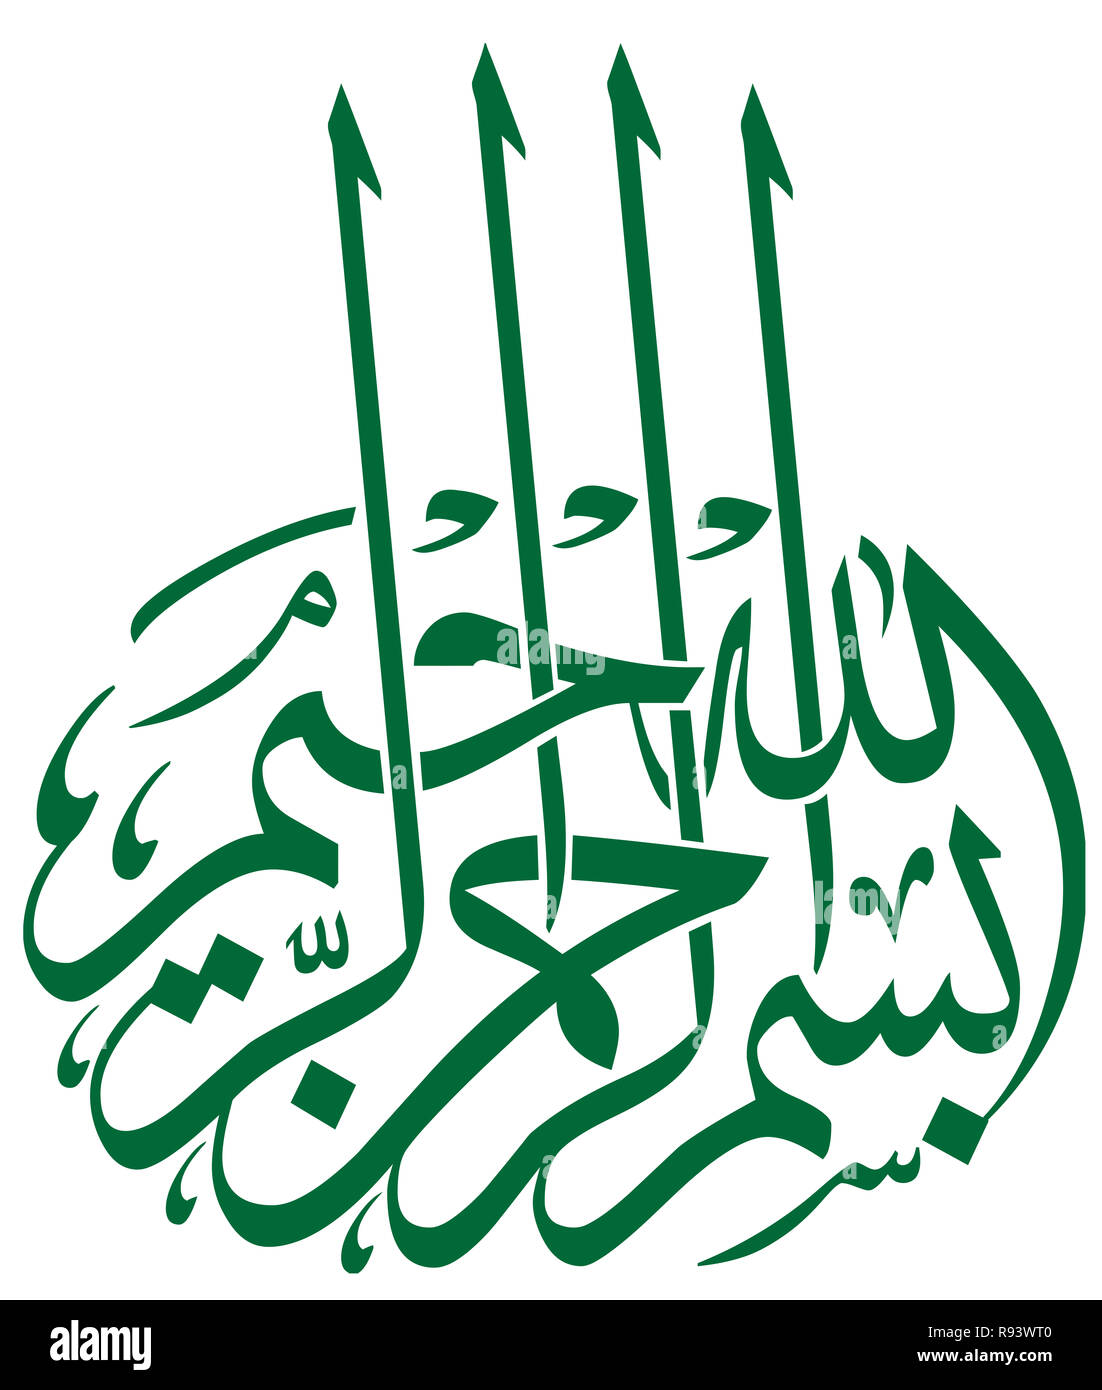 quran calligraphy islamic holy green religious illustration Stock Photo